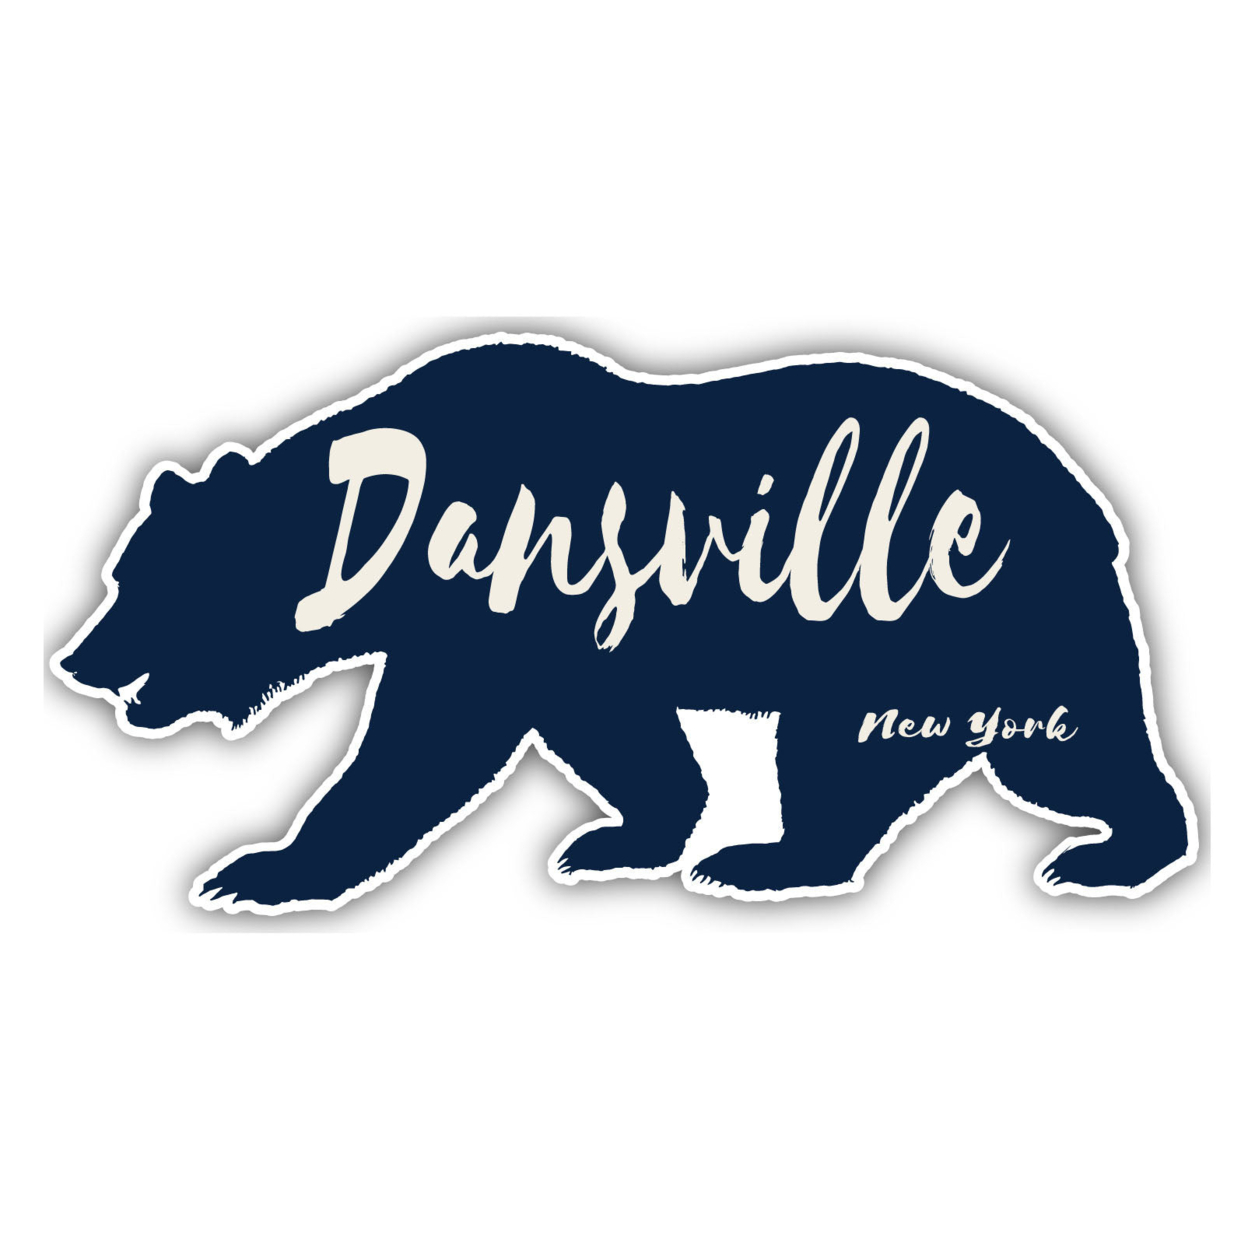 Dansville New York Souvenir Decorative Stickers (Choose Theme And Size) - Single Unit, 6-Inch, Bear